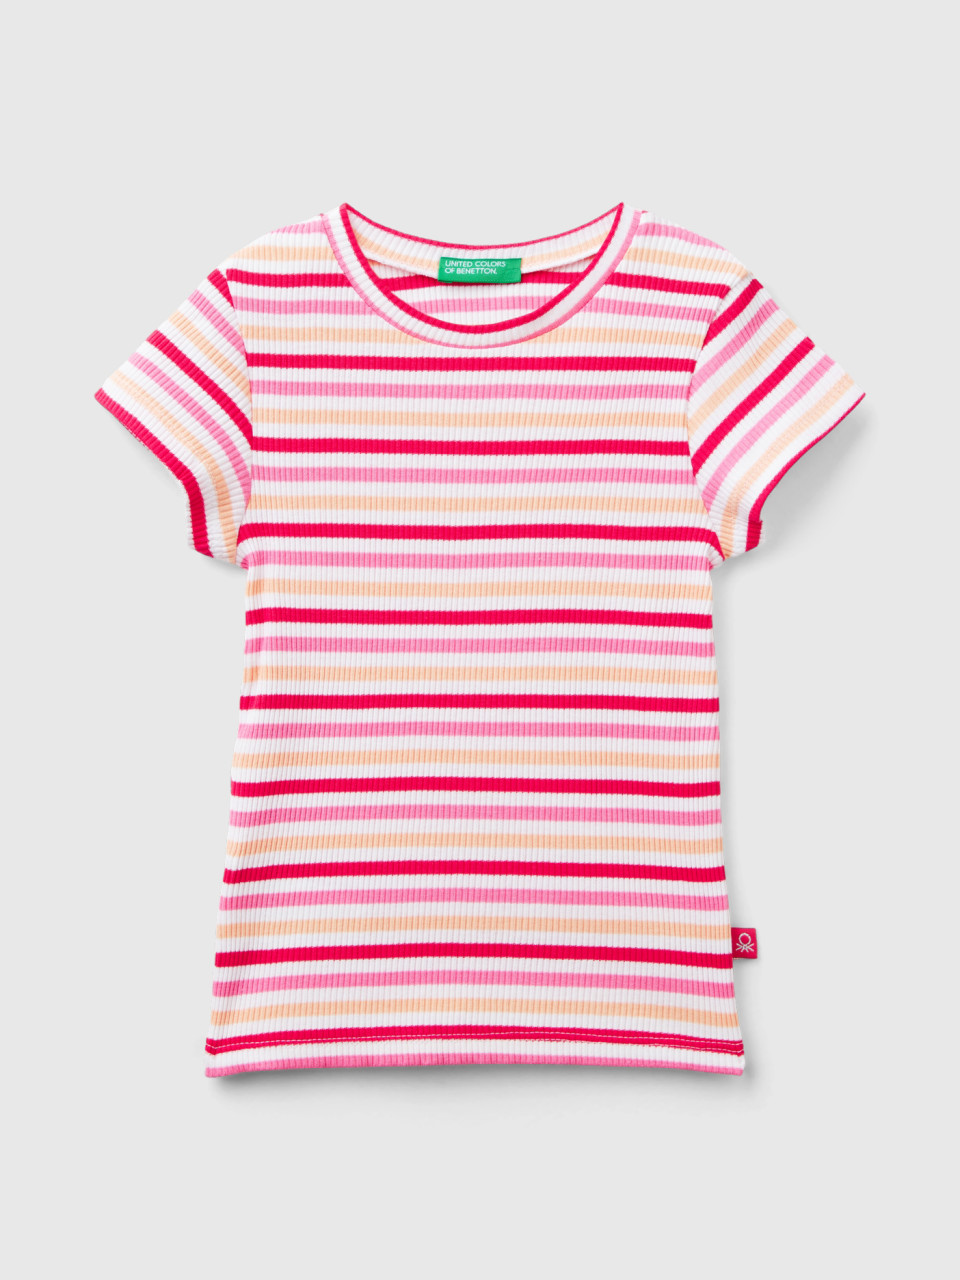 Benetton, Striped Slim Fit T-shirt, Multi-color, Kids